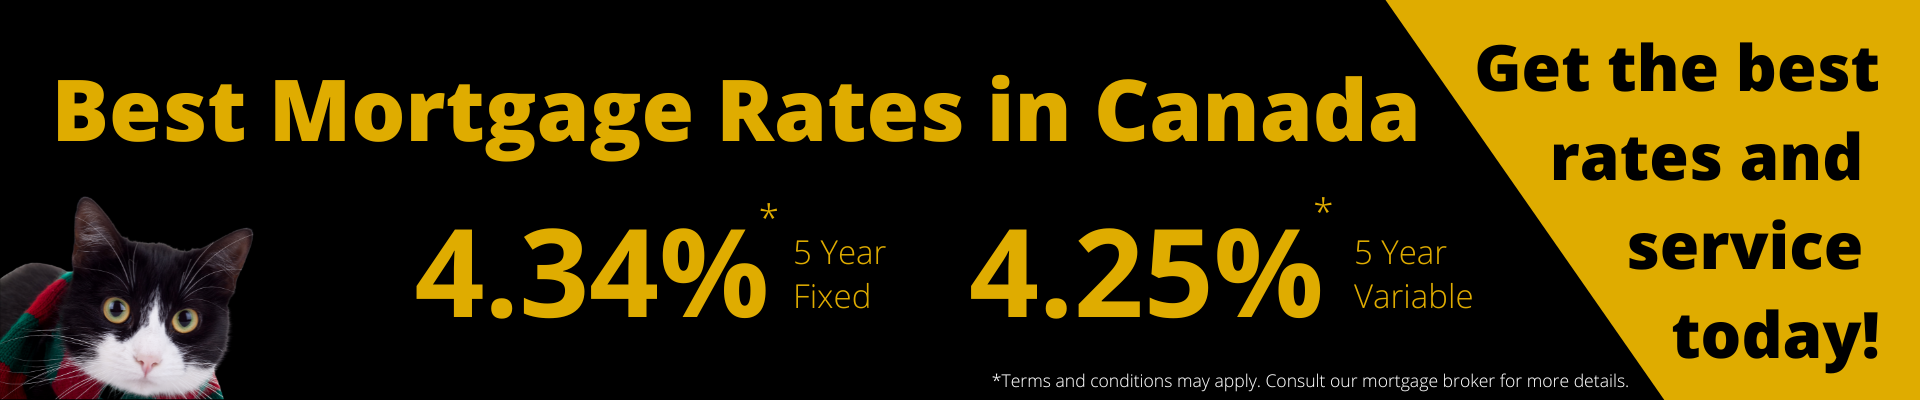 Best Mortgage Rates - TD Mortgage Rates- CIBC Mortgage Rates - BMO Mortgage Rates - RBC Mortgage Rates - HSBC Mortgage Rates - Scotiabank Mortgage Rates - 5 year fixed mortgage rates -Citadel Mortgages 1